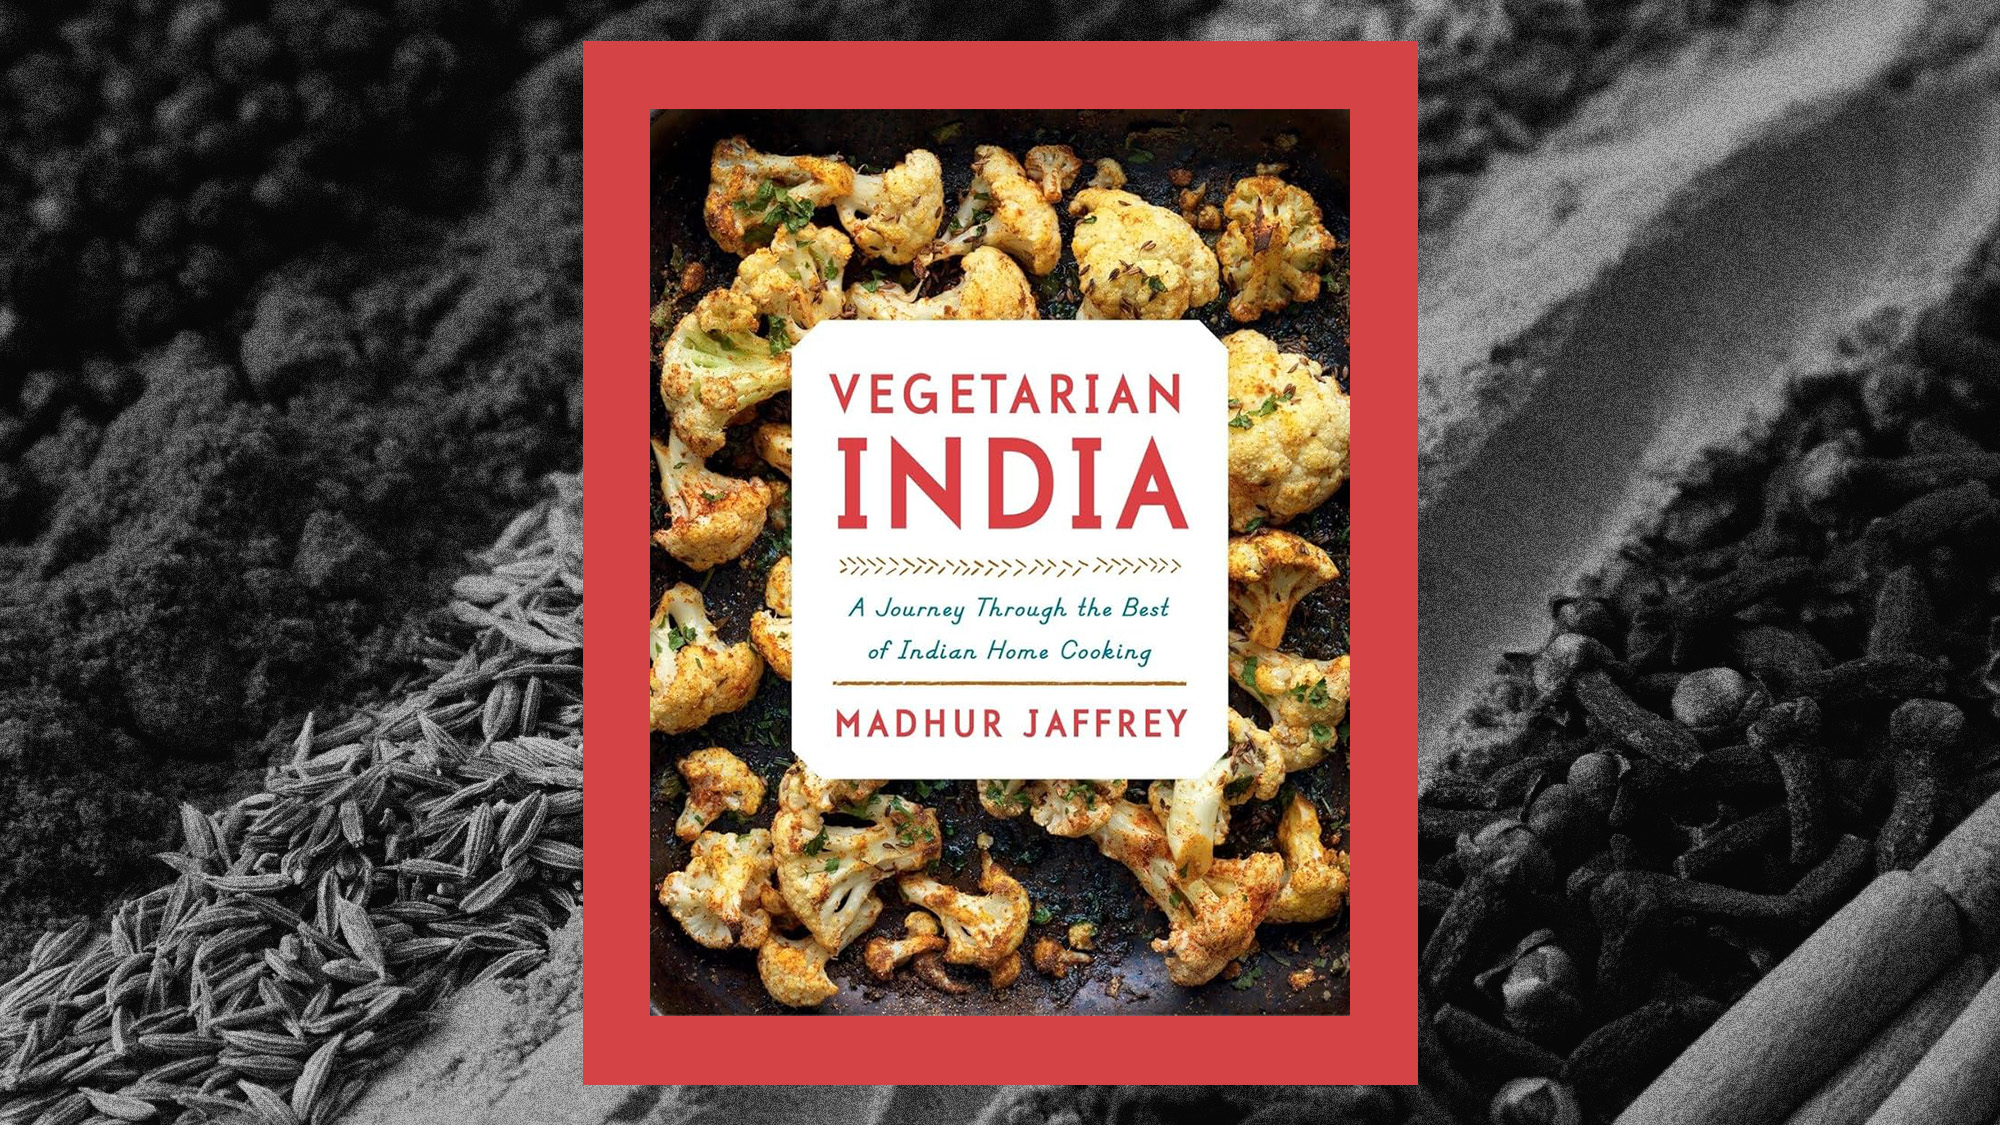  One Great Cookbook: Madhur Jaffrey's 'Vegetarian India' 